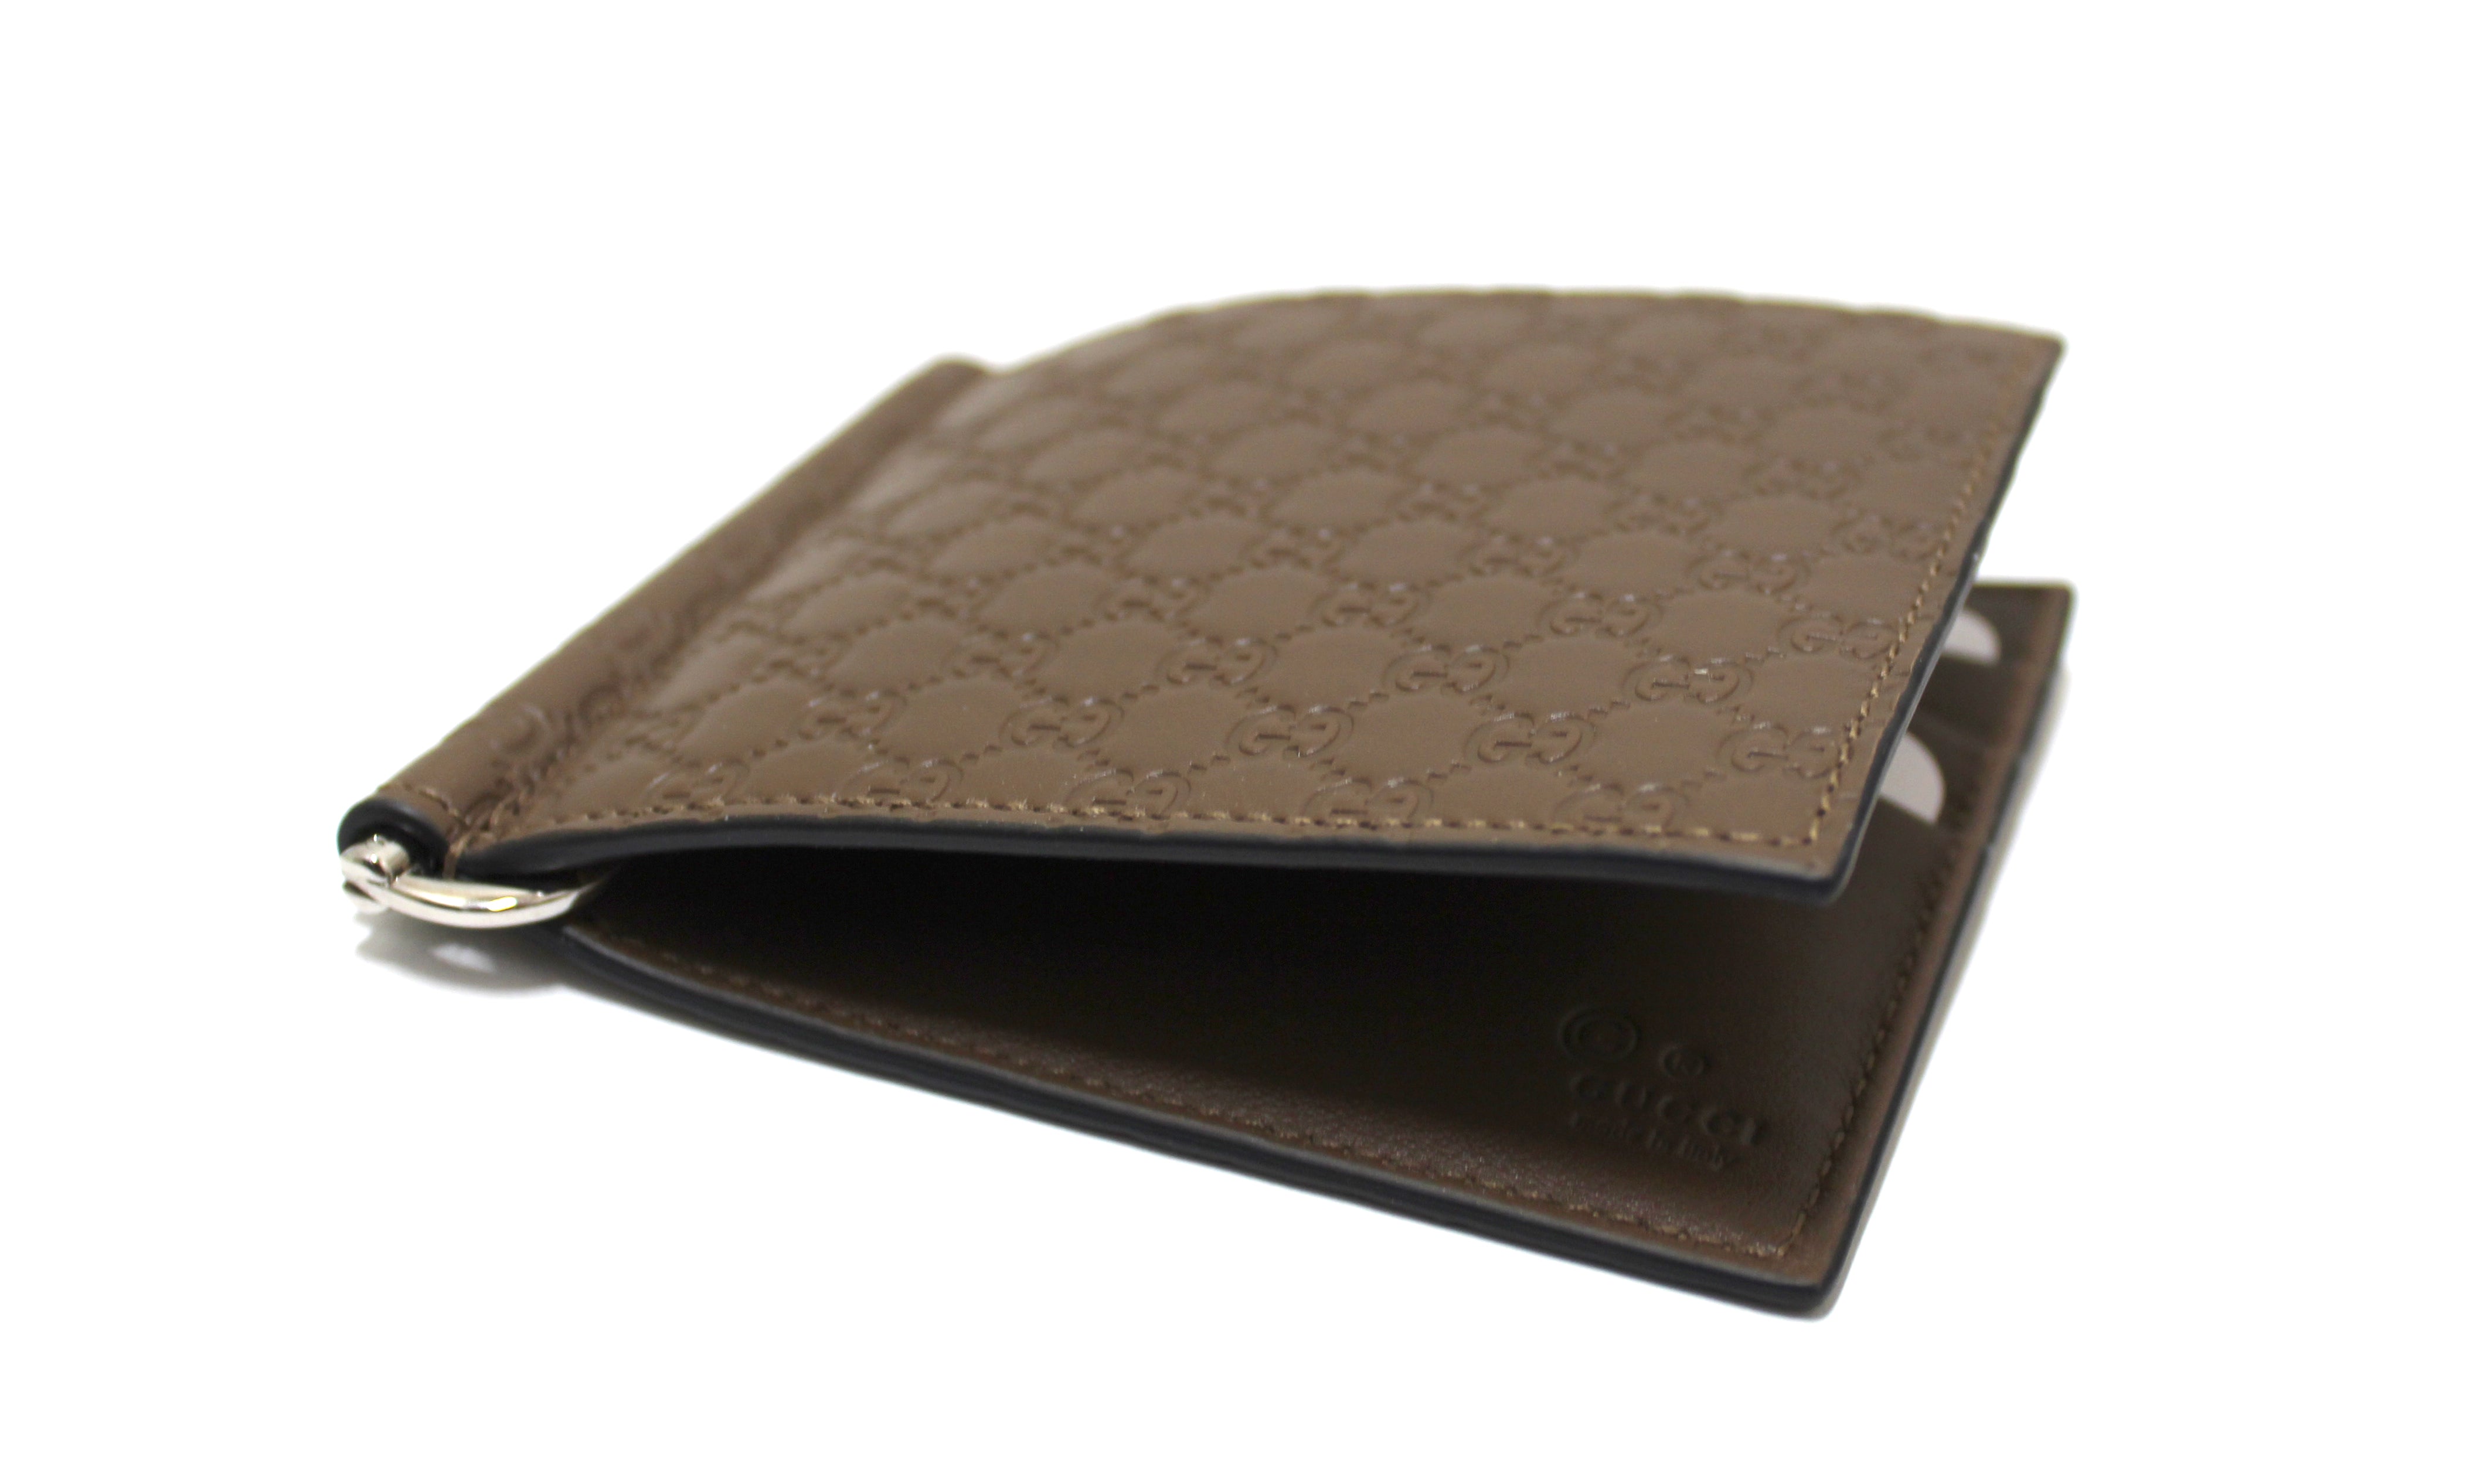 Authentic New Gucci Brown Microguccissima Leather Money clip Bi-fold Men's Wallet 544478